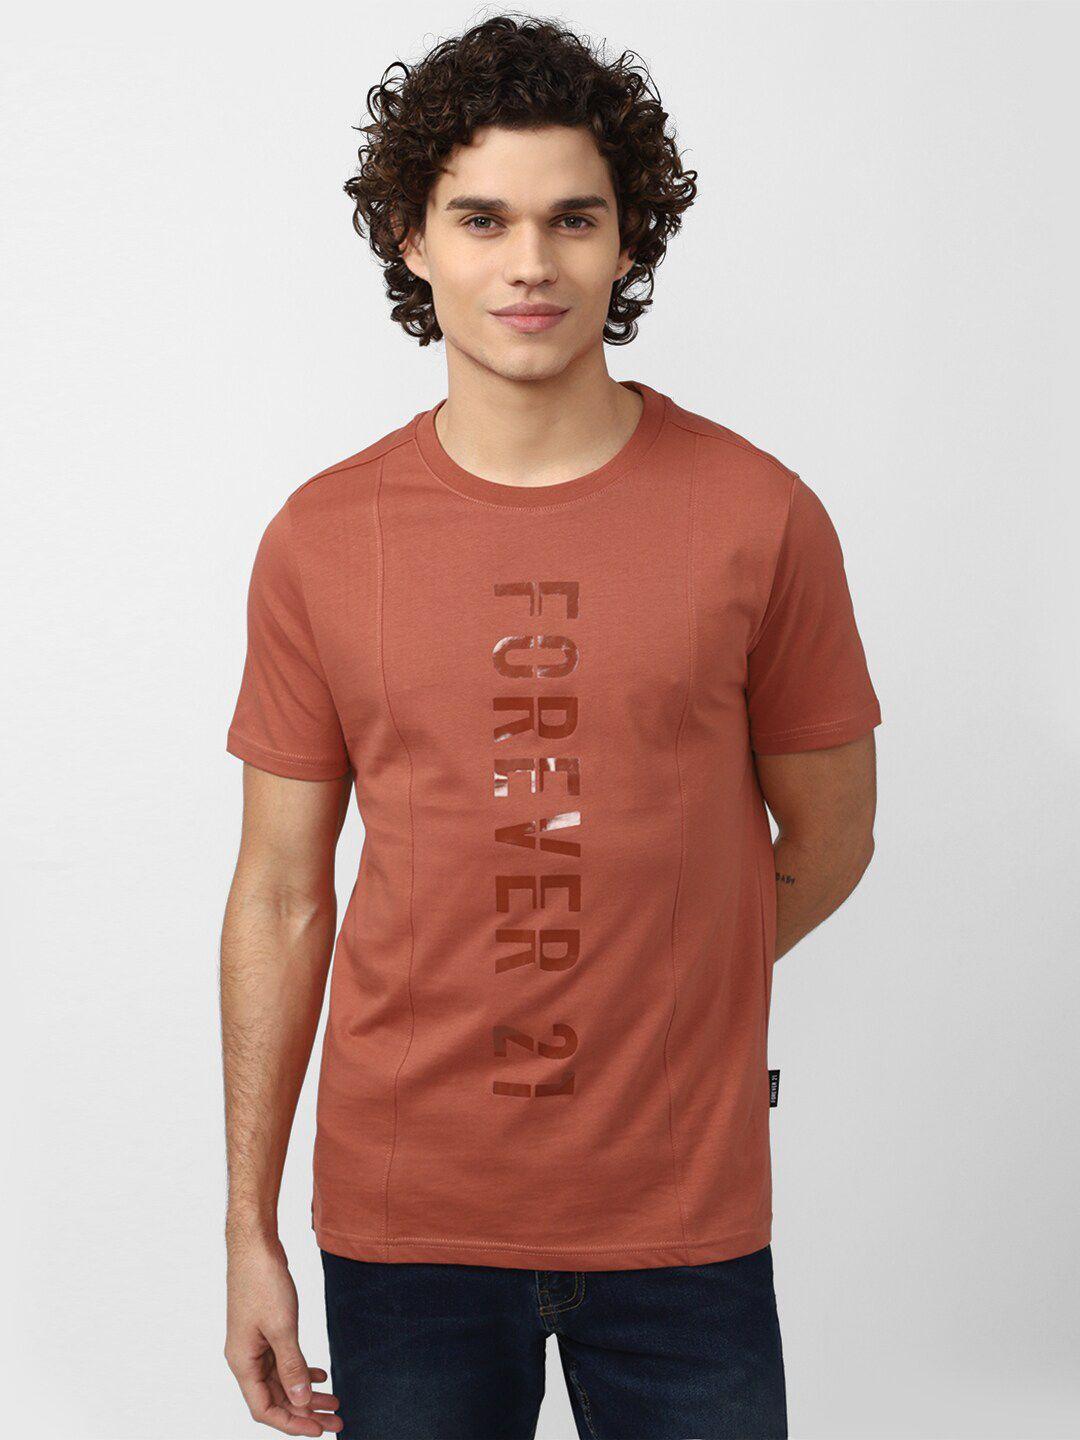 forever-21-men-brand-logo-printed-pure-cotton-t-shirt